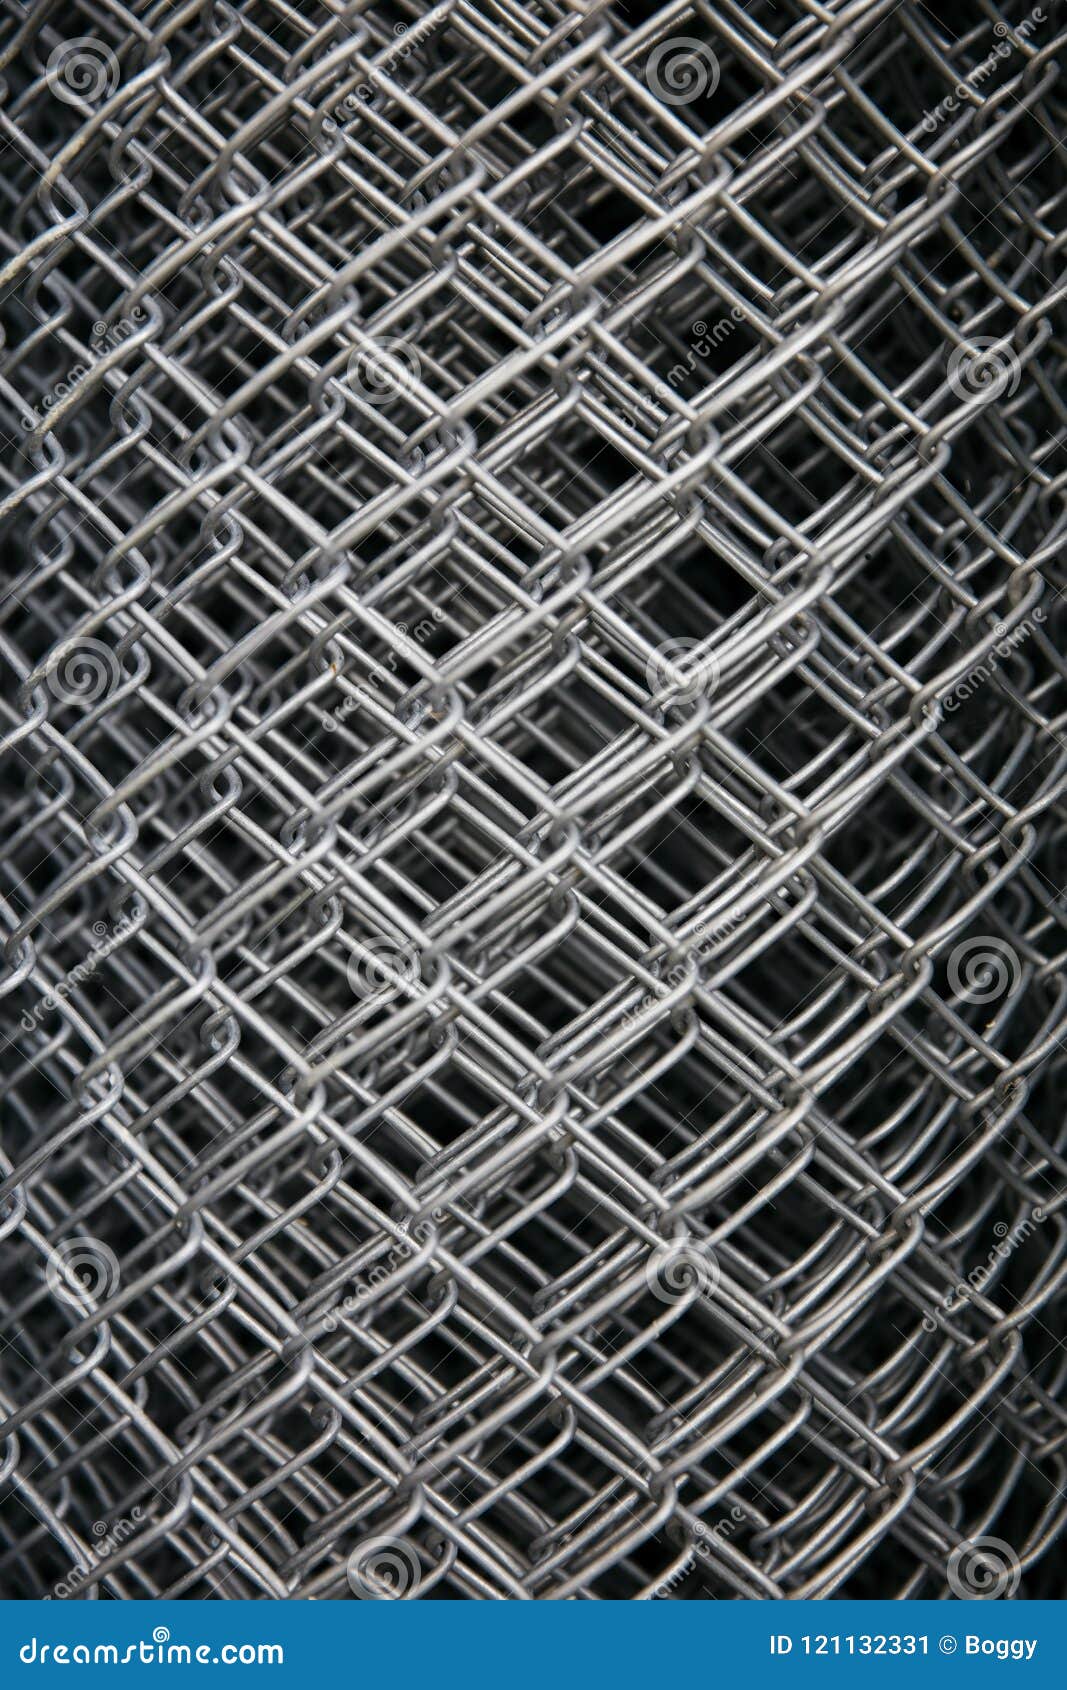 Metal grid background stock image. Image of iron, fence - 121132331
